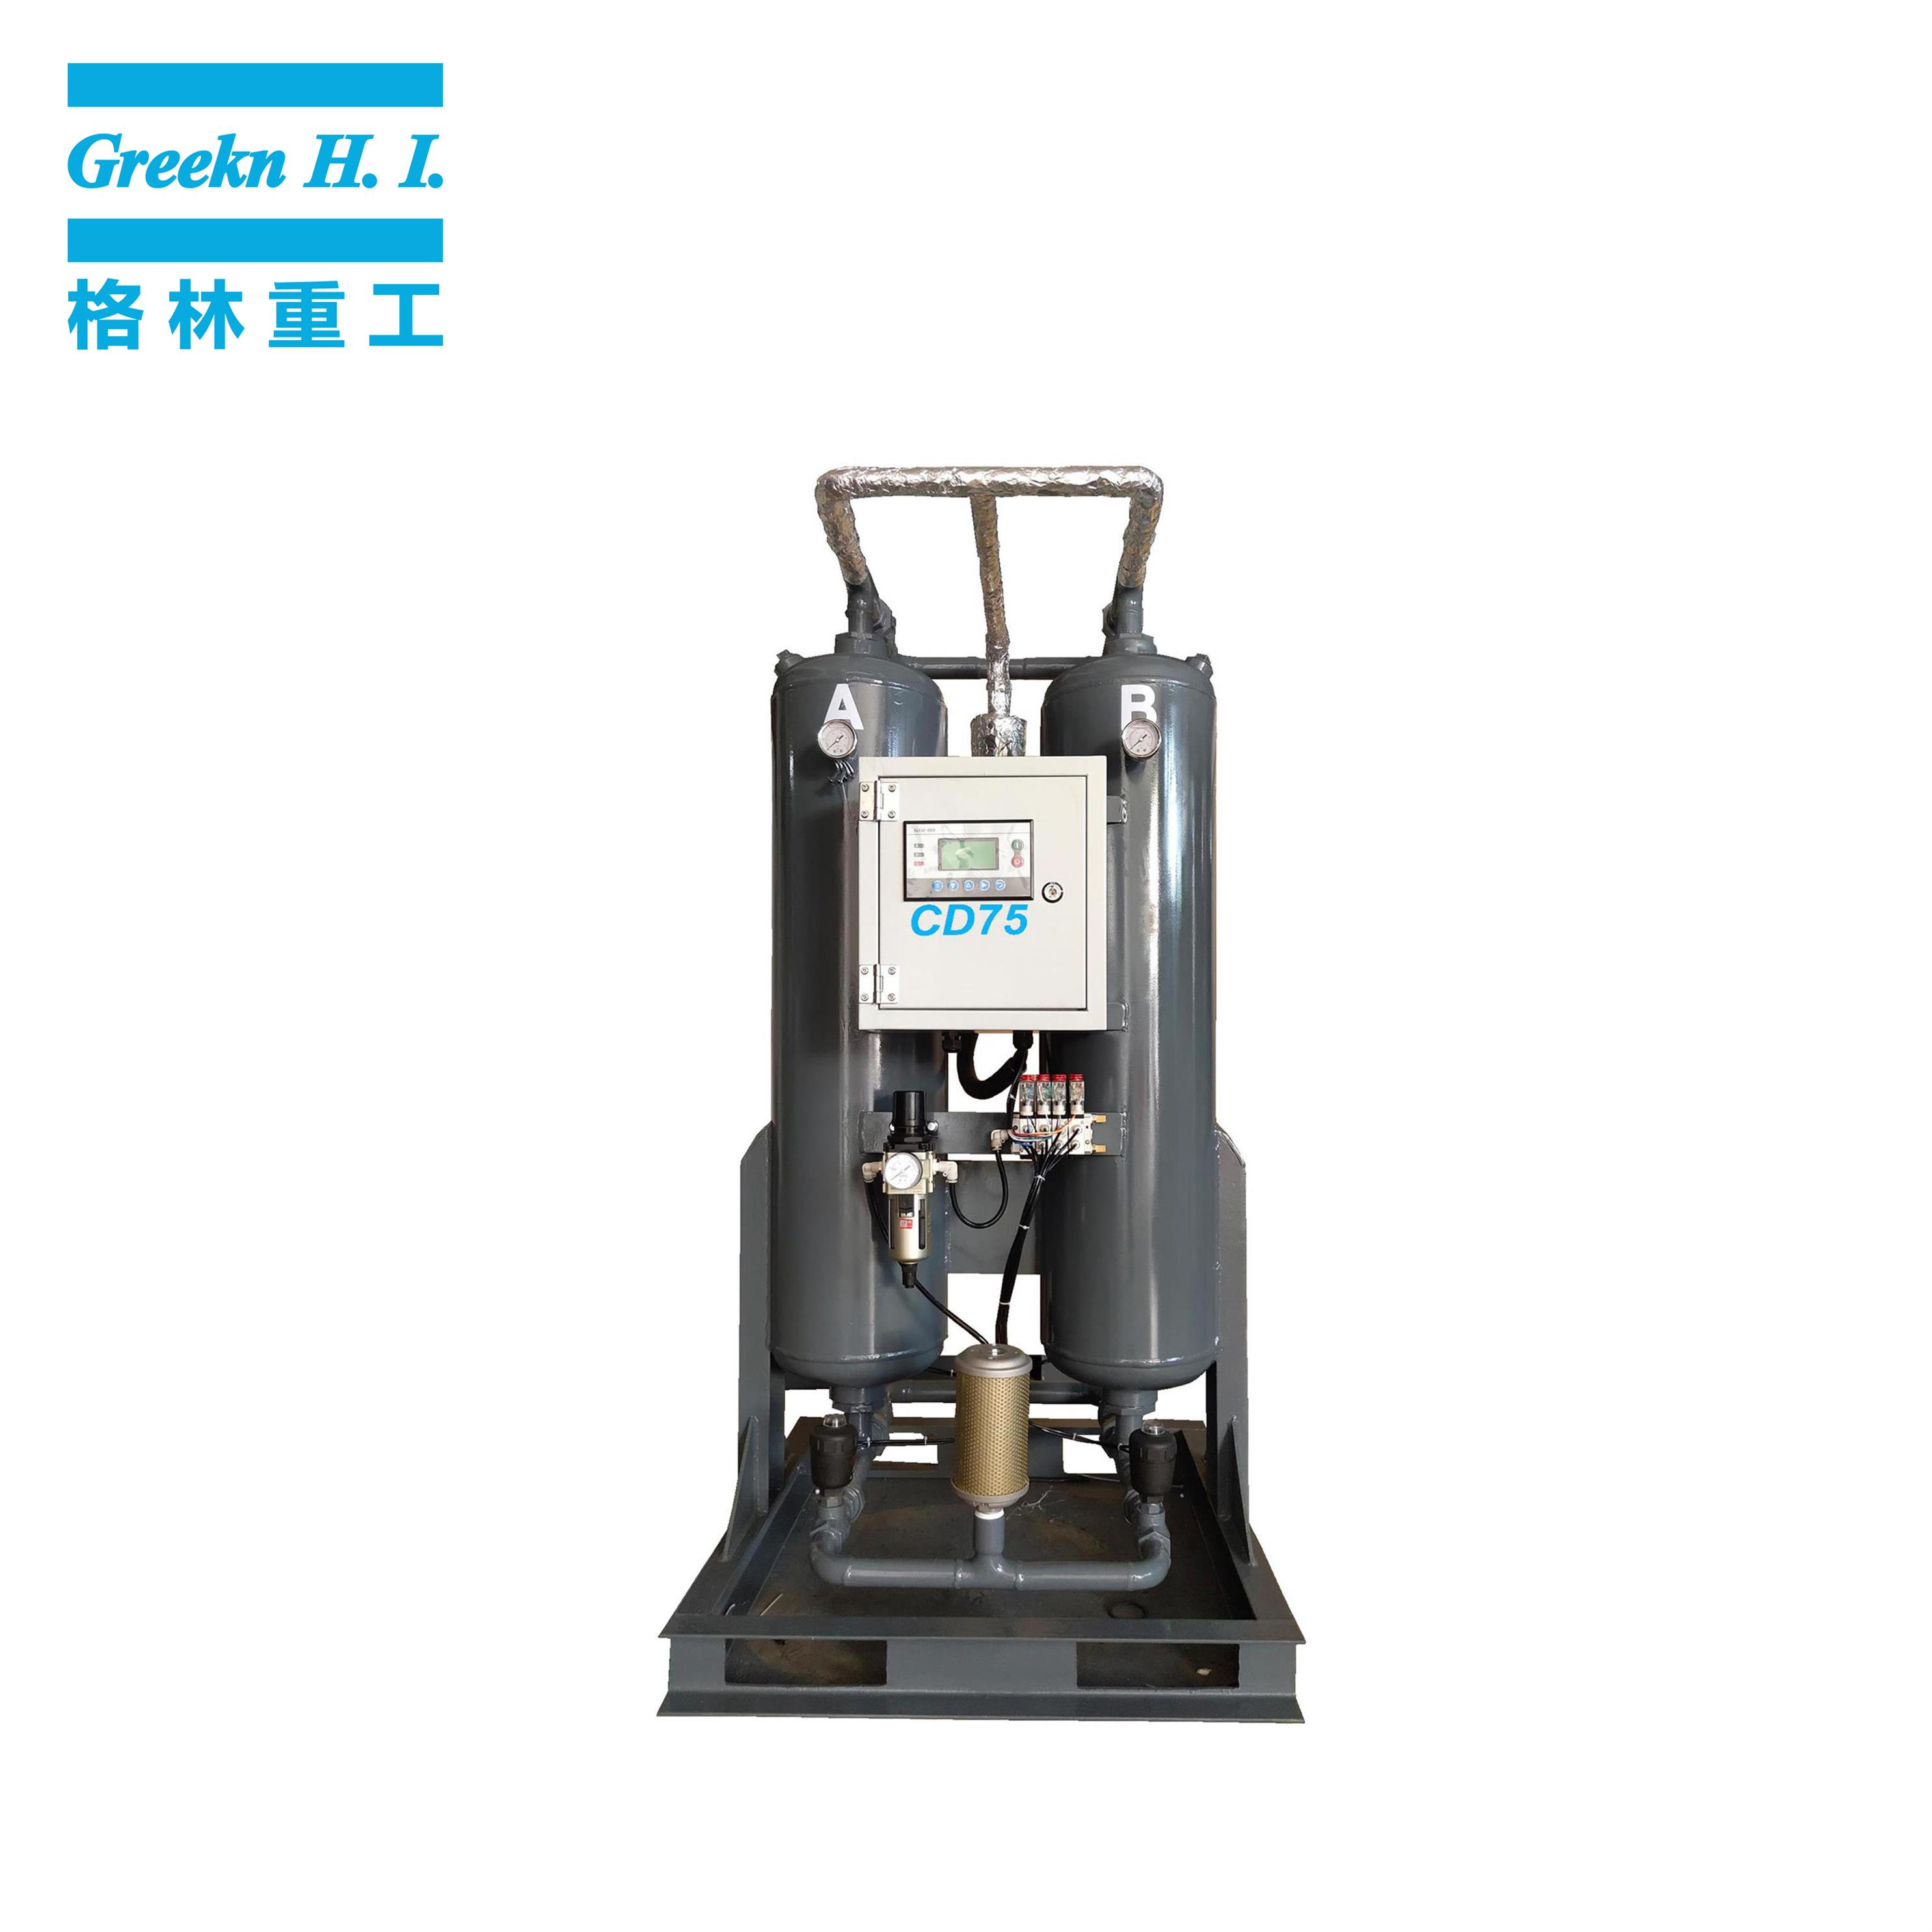 Greenair CD75 Adsorption Air Dryer Compressed Air Dryer